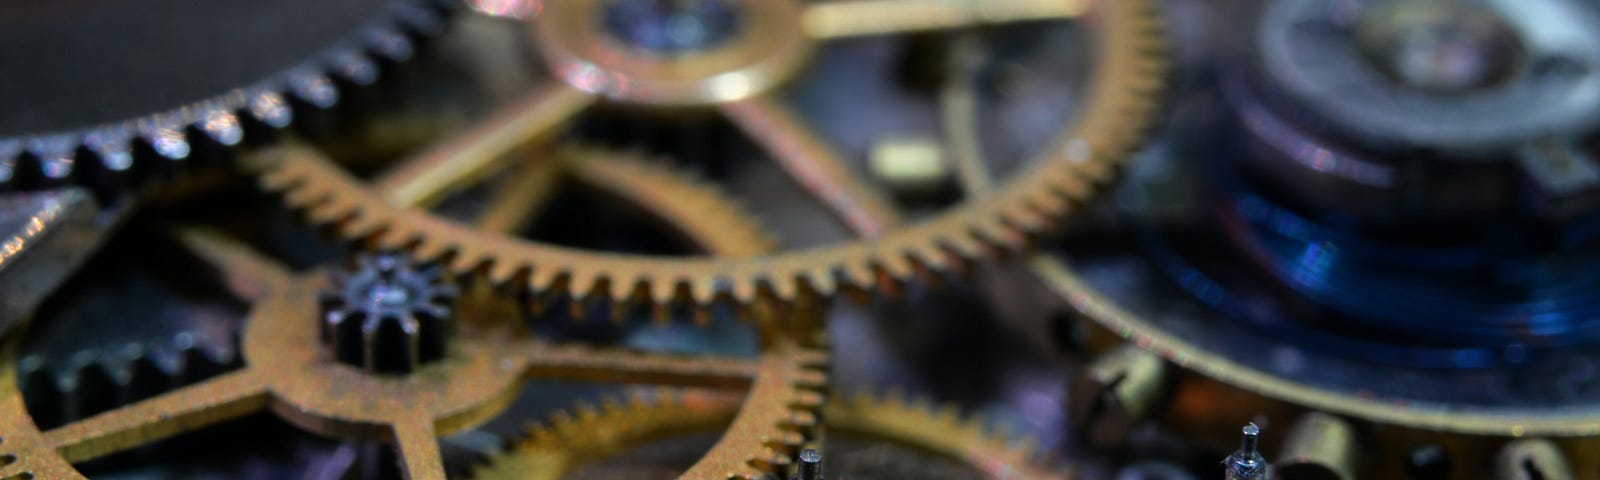 A close of image of interlocking gears